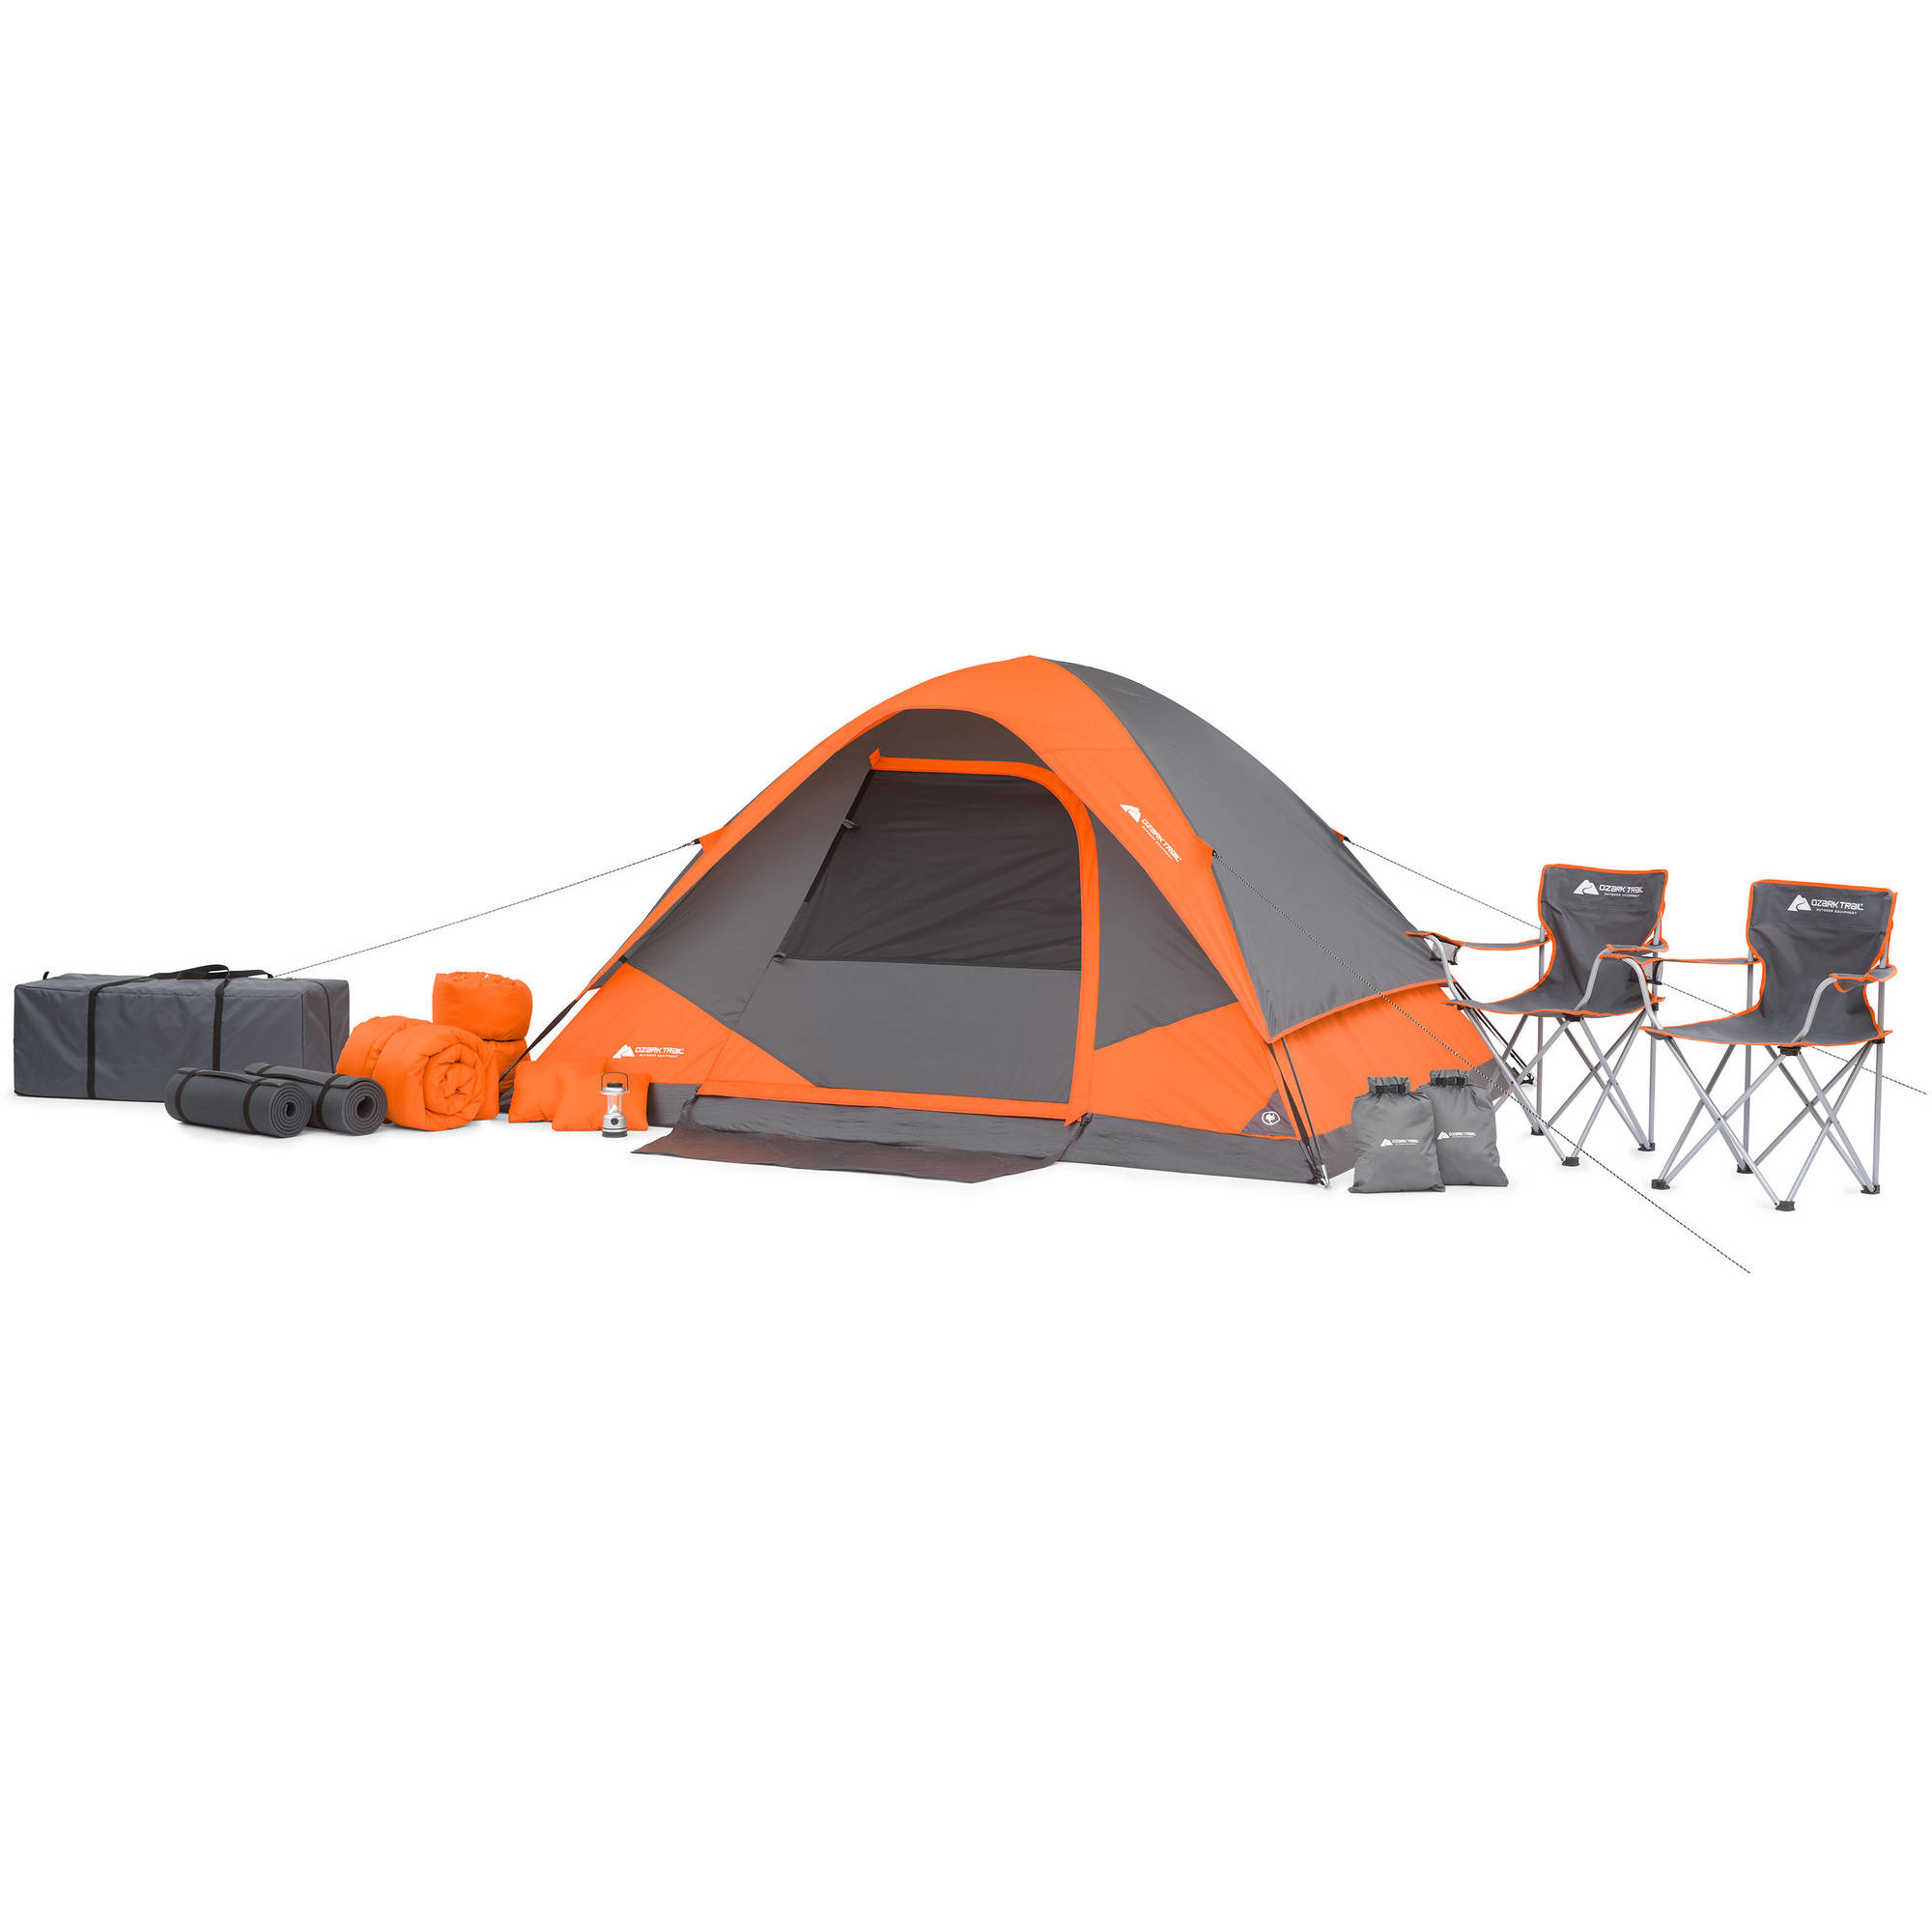 Get the 22pc Ozark Camping Set...